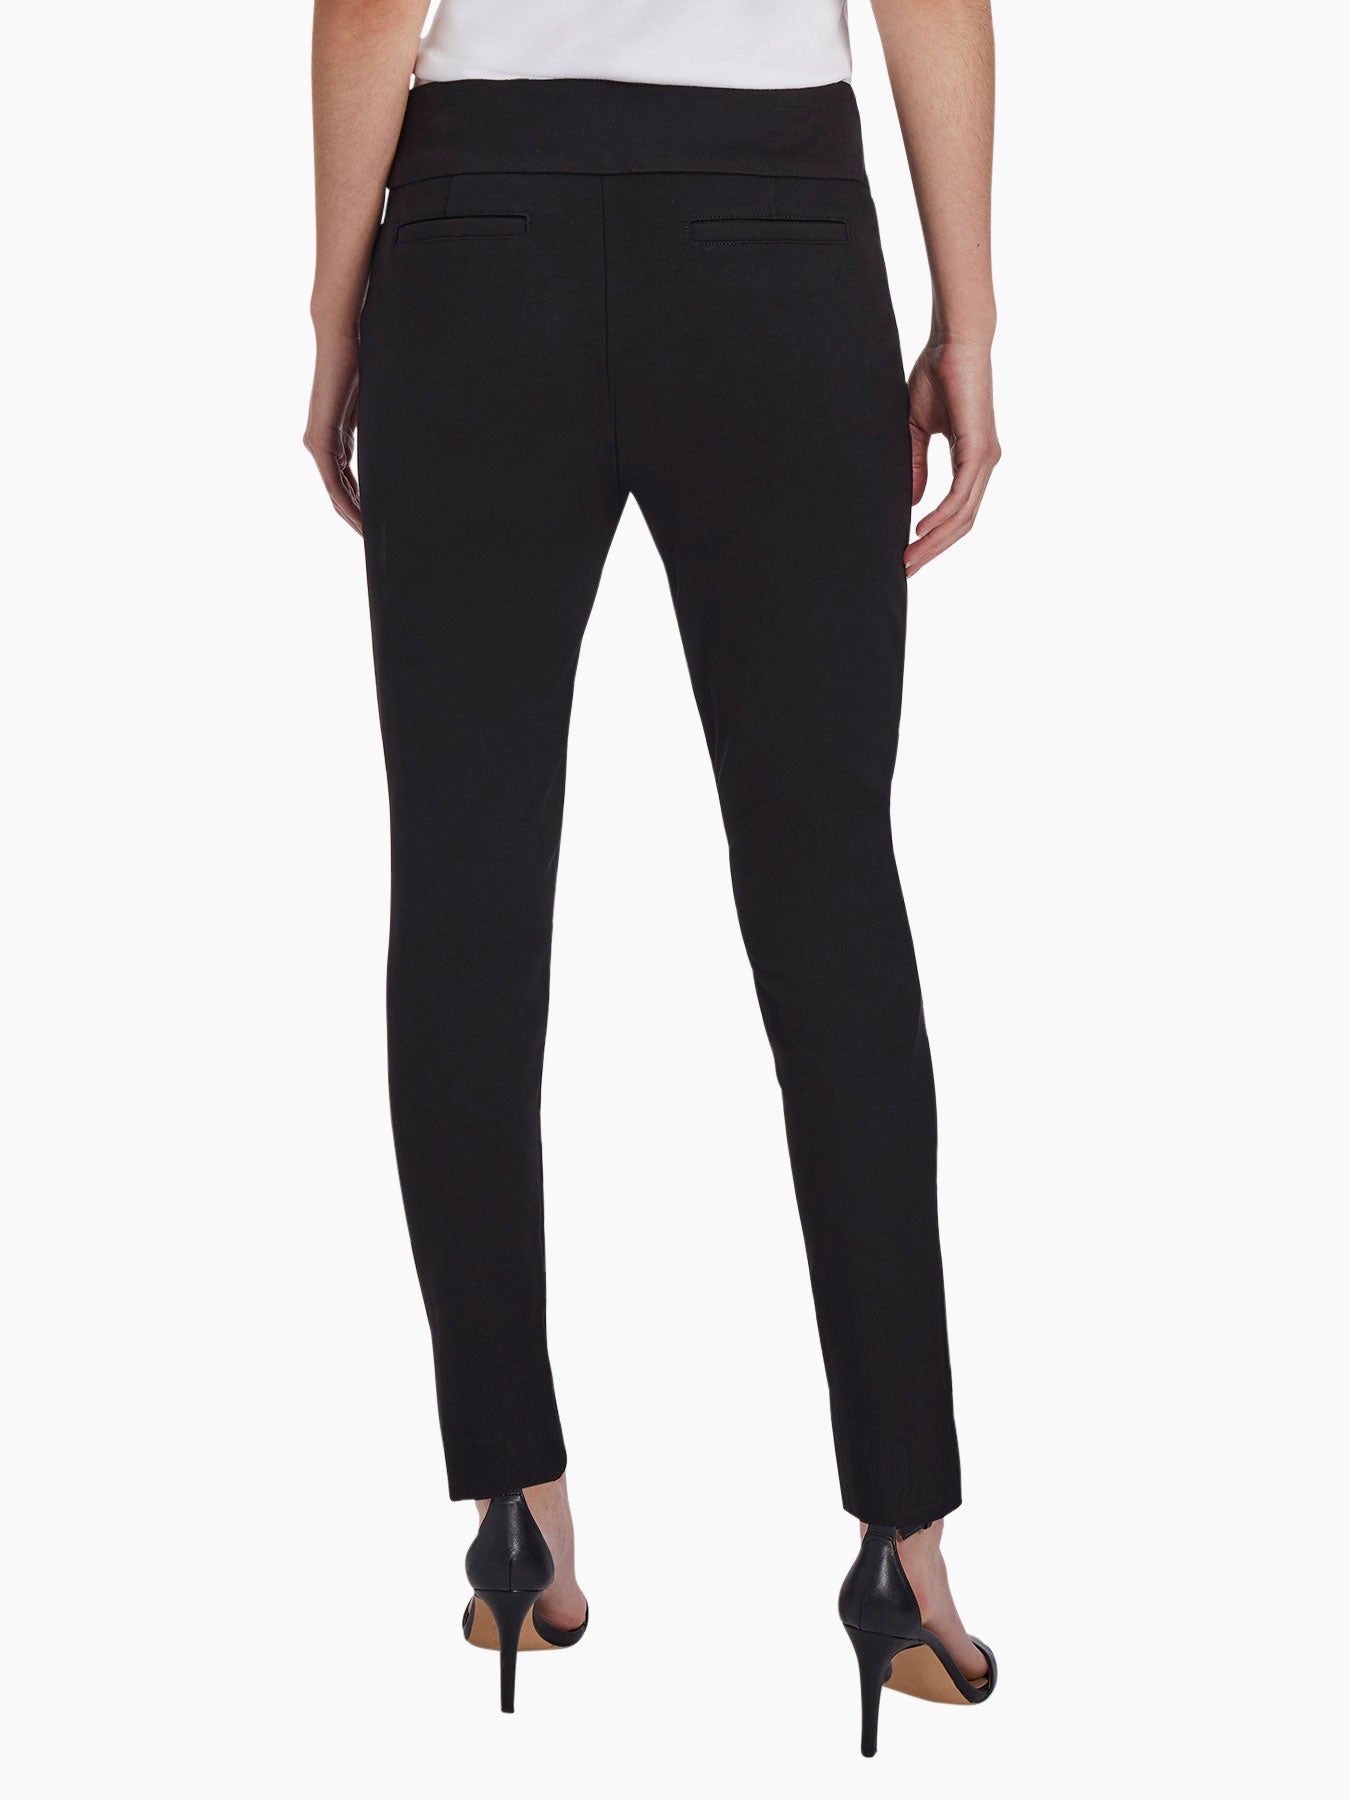 Jones New York Solid Black Dress Pants Size 8 - 78% off